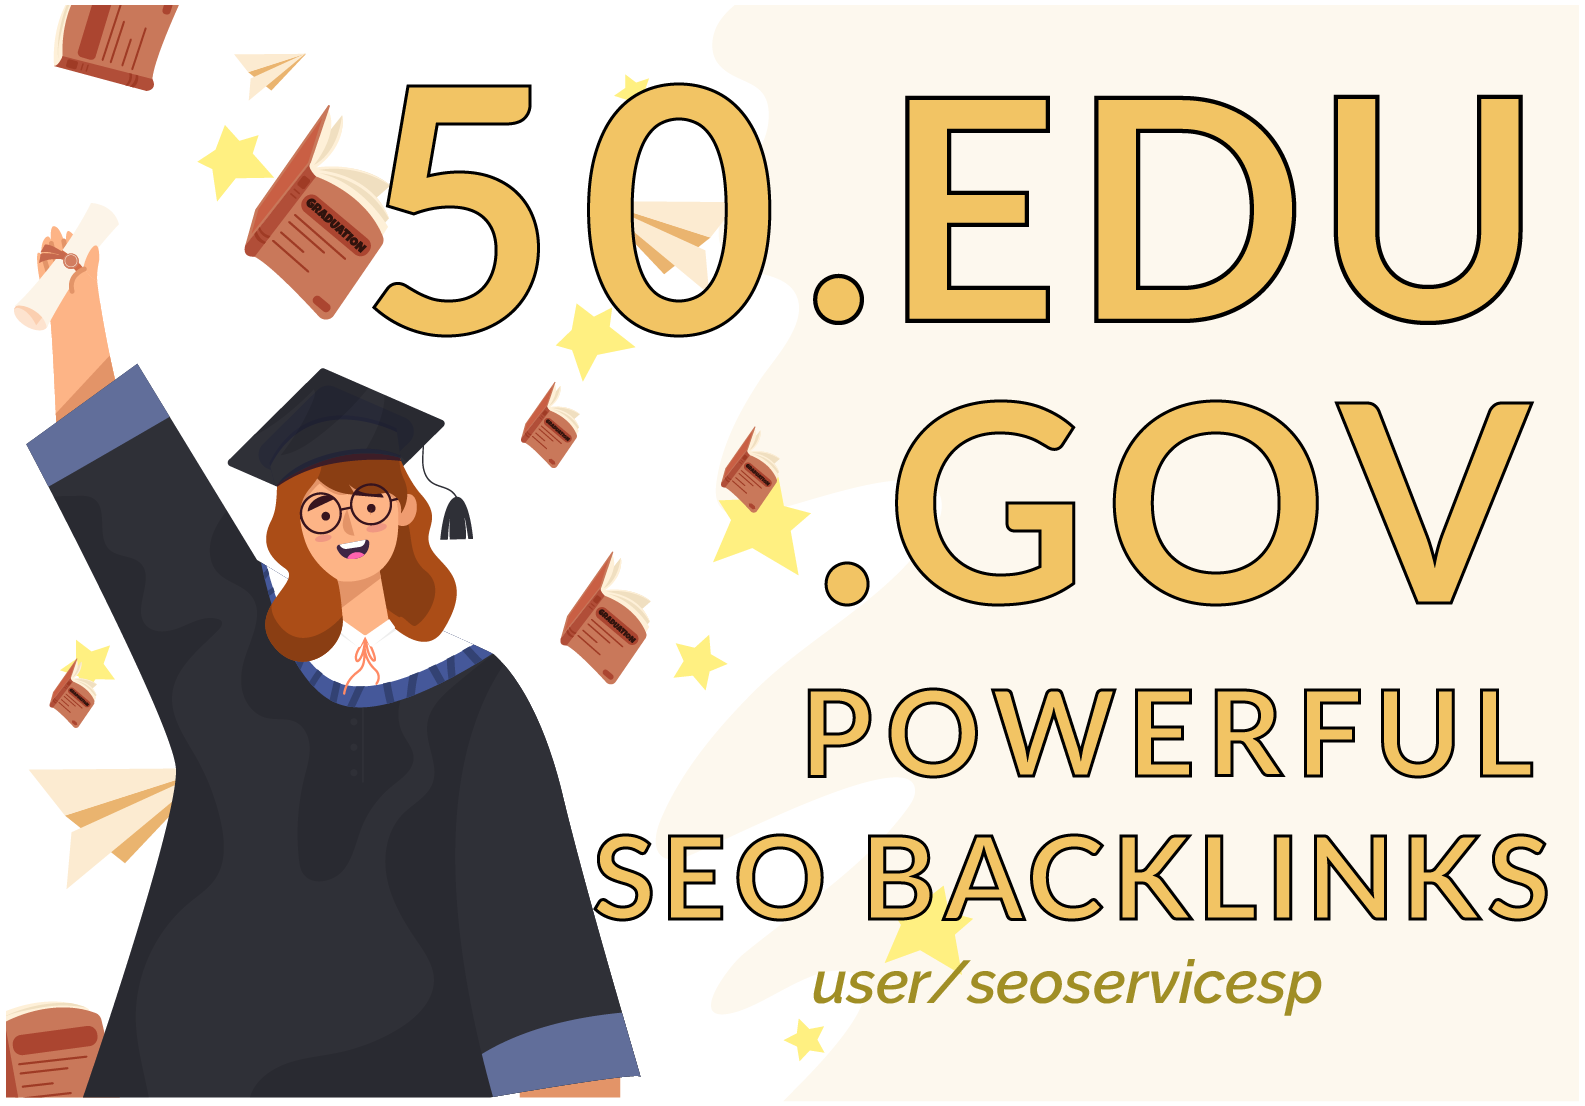 Top 50 Edu Gov Fast Index SEO Backlinks Boost Your Google Ranking